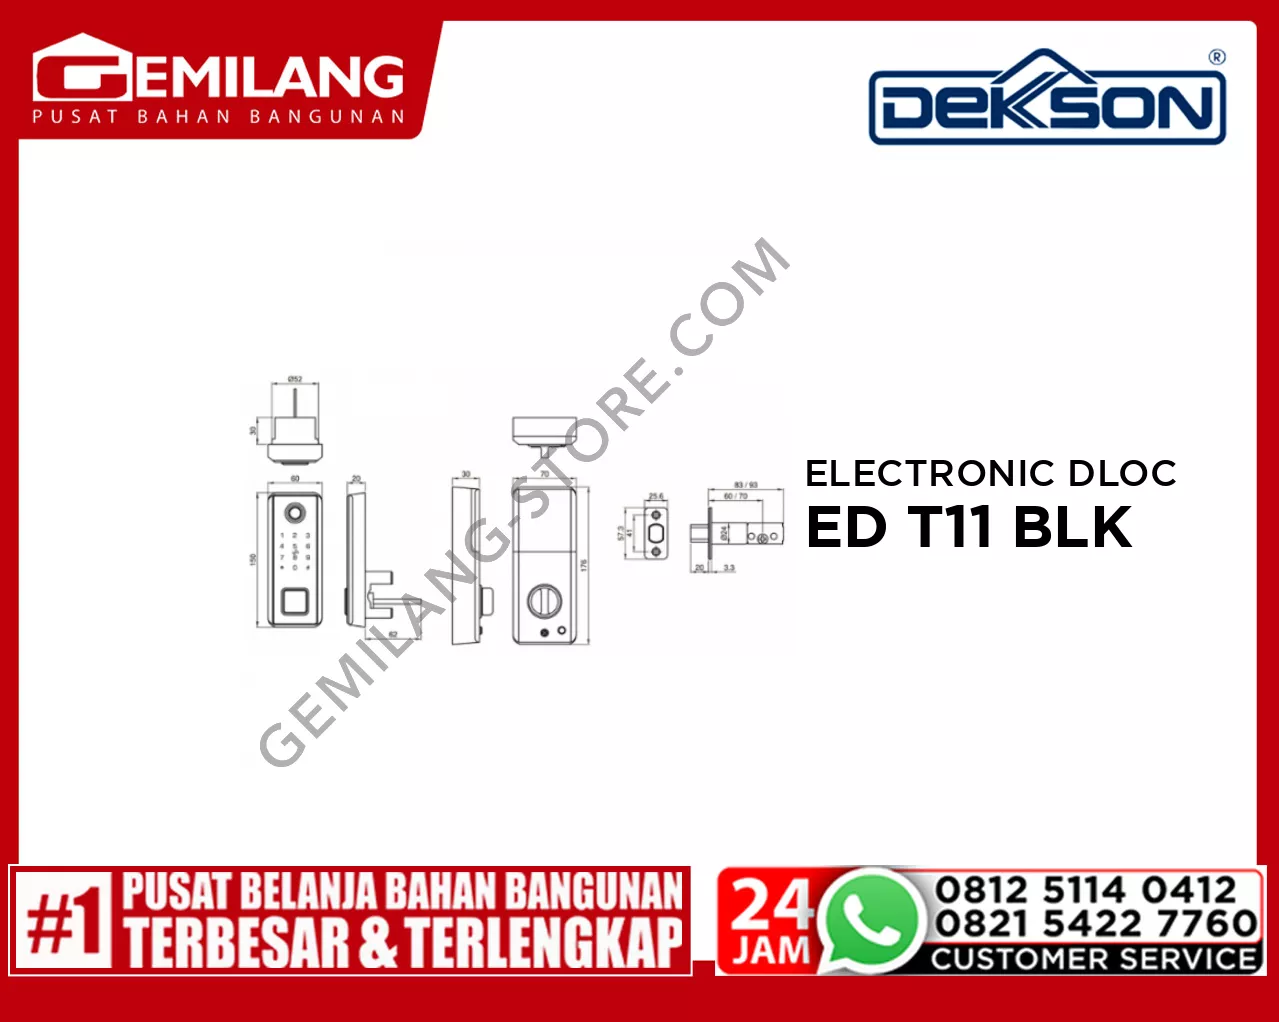 DEKKSON ELECTRONIC DEADLOCK ED T11 BLACK